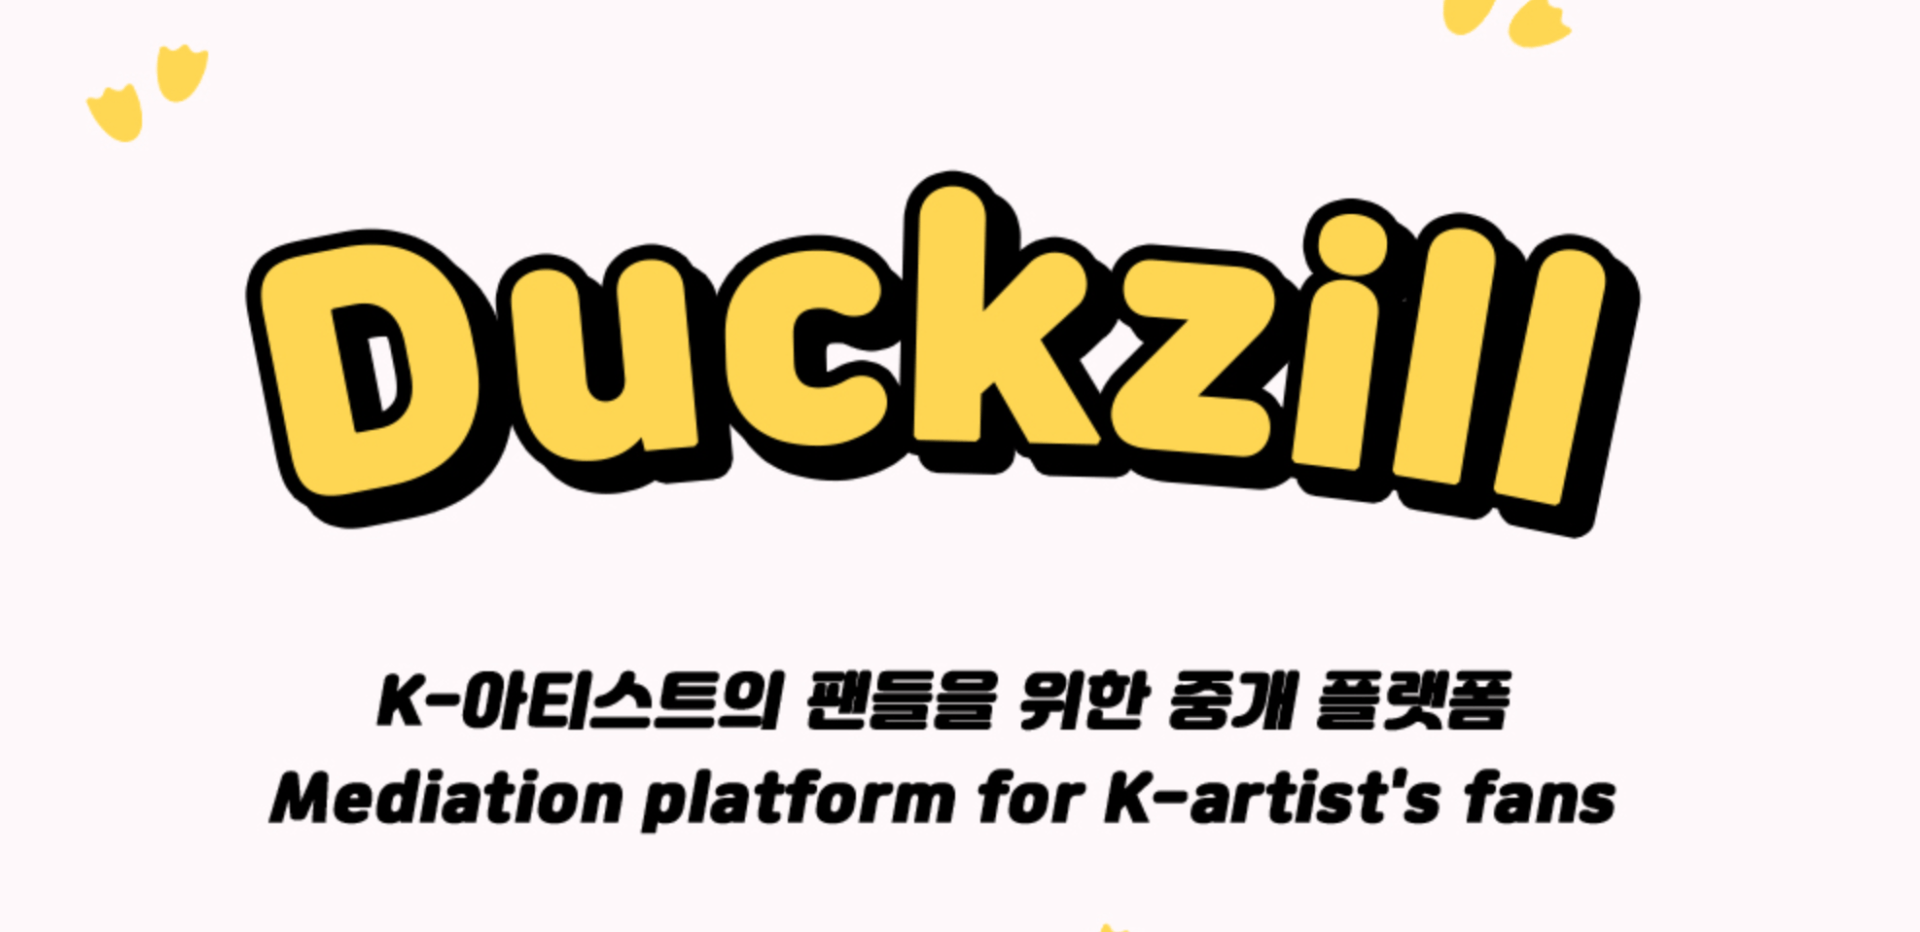 Duckzill is a popular app for K-Pop fans.